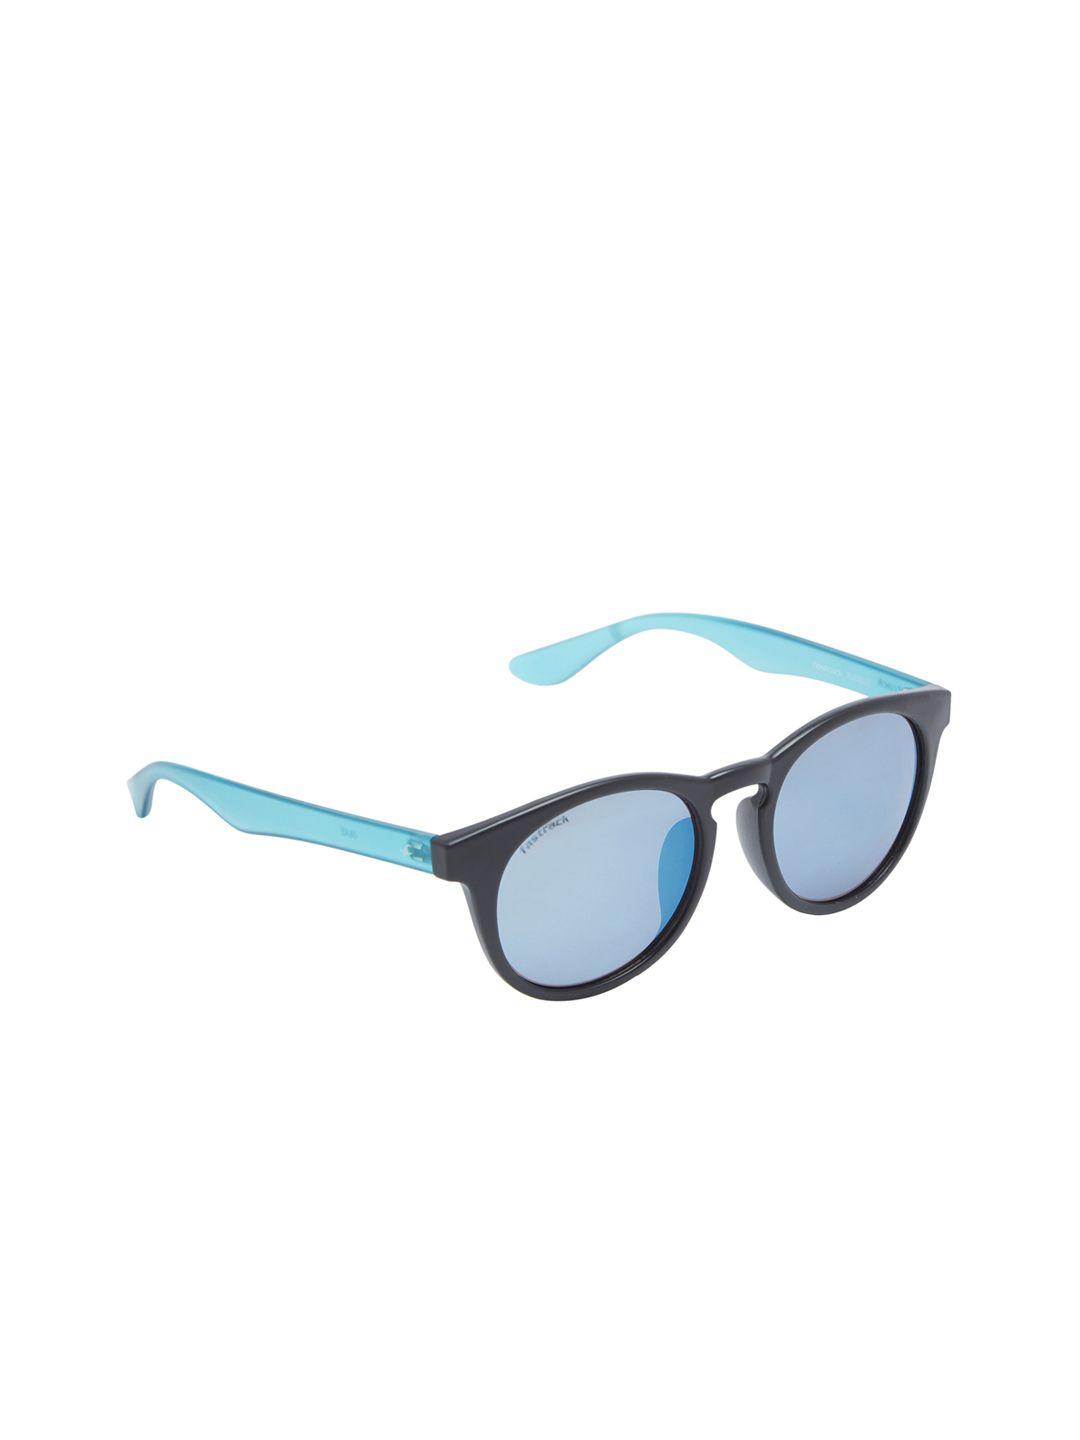 fastrack-men-round-sunglasses-p378bu3